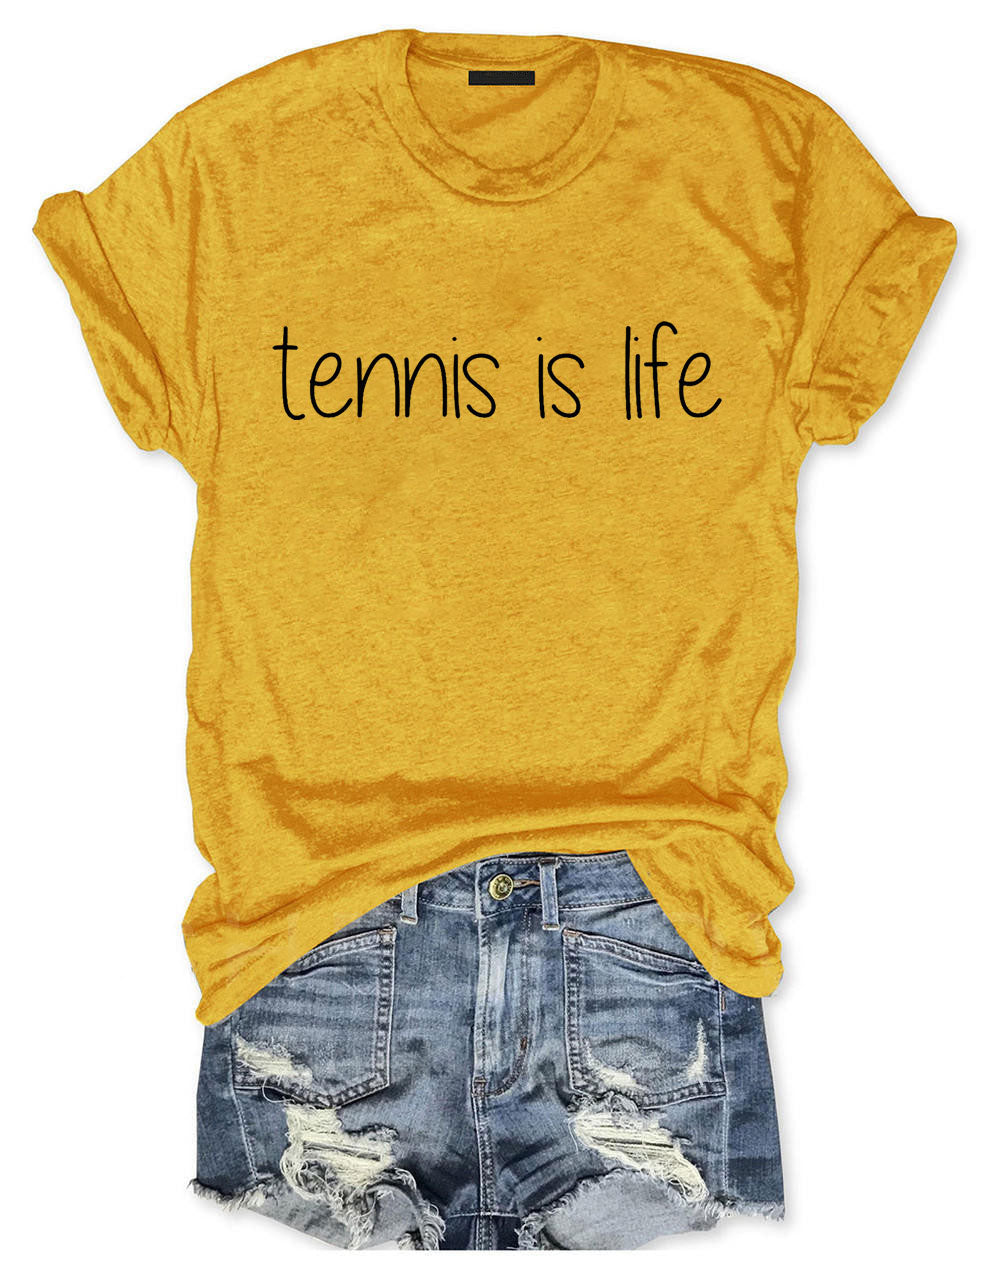 Tennis is life T-Shirt